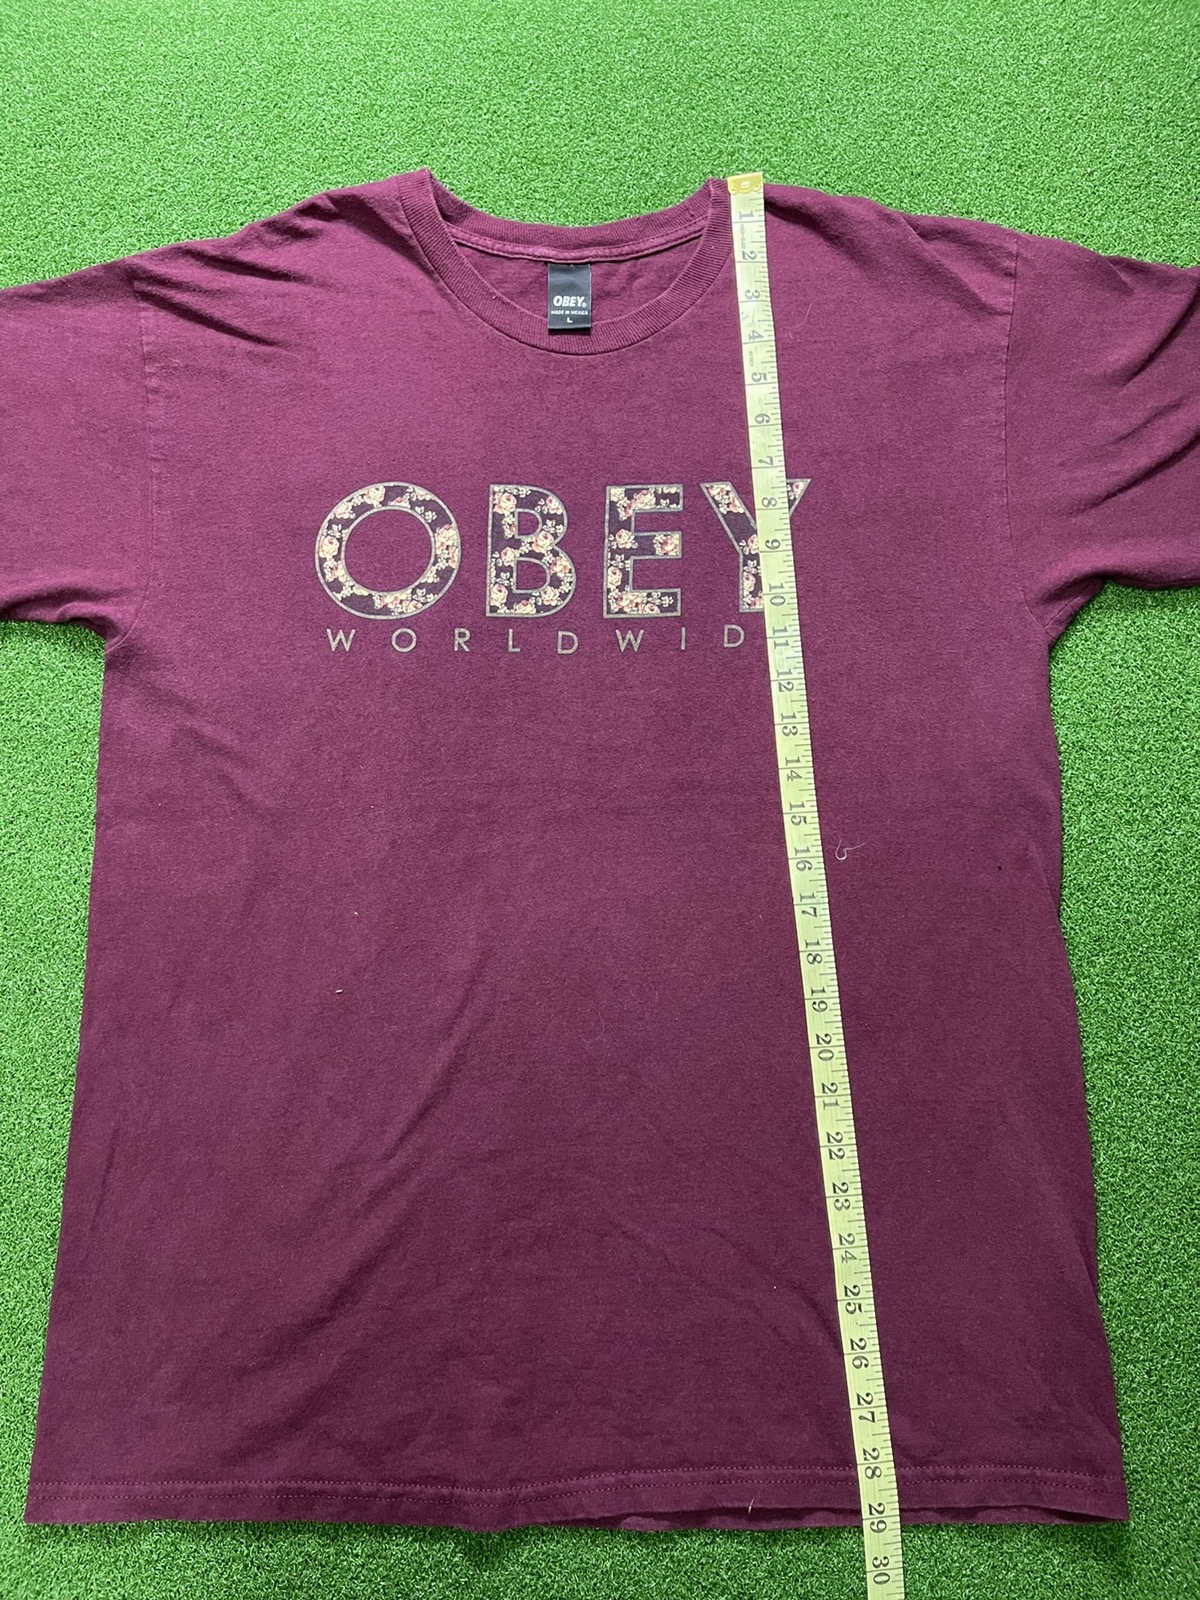 Obey - Obey Tshirt Vintage Item - 4